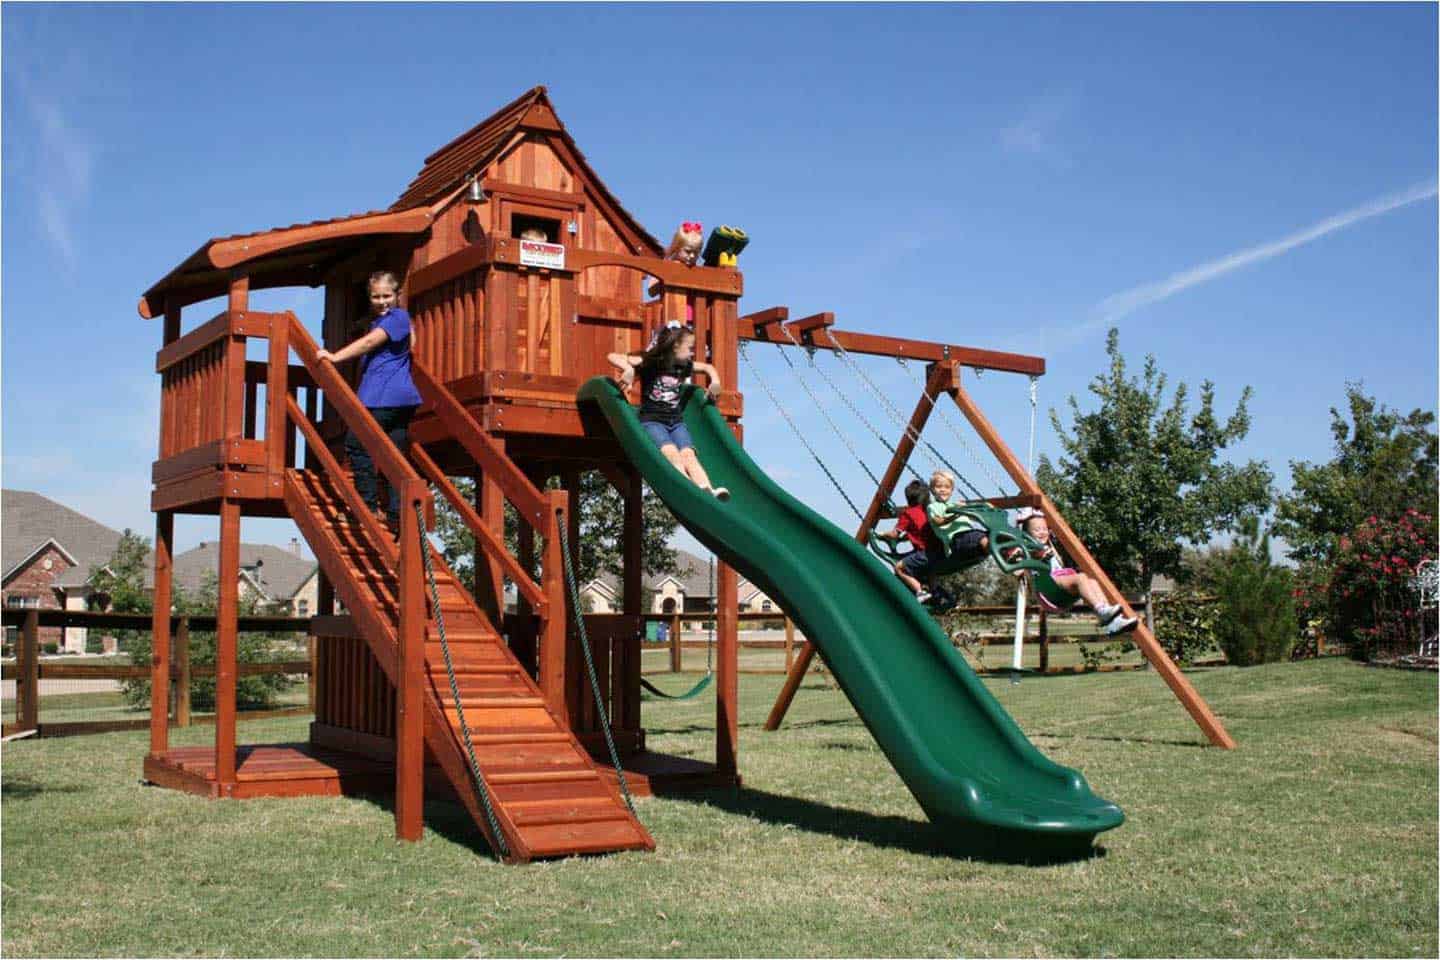 mustang swing set, ramp, cabin, wooden swing set, swing set, swings, slide, swing set for kids, kids, children, play, playground, playset, sets, accessories, backyard swing set